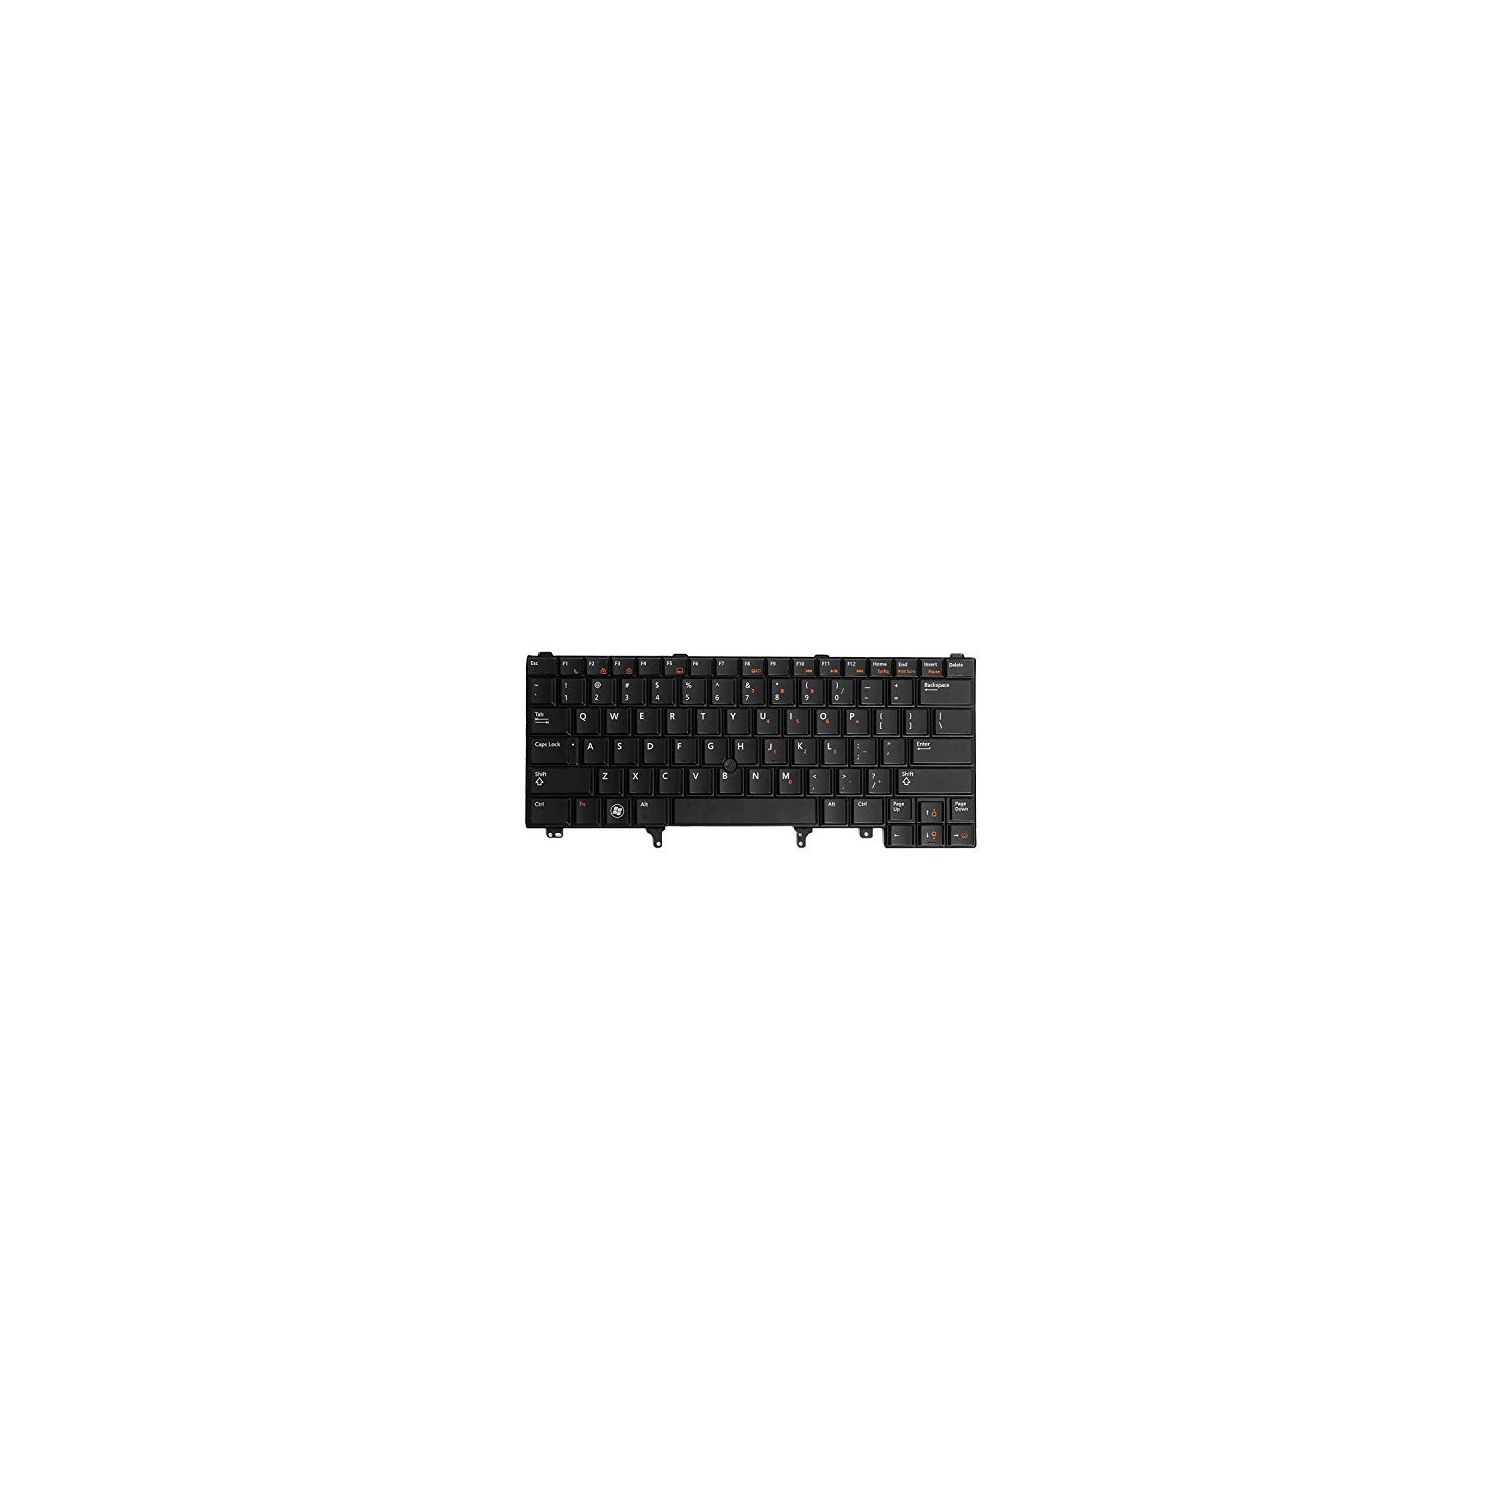 LaptopKing Replacement Keyboard for Dell Latitude Series E6320 E6330 E6420 E6430 E6440 E5420 E5430 Laptops Black US Layout